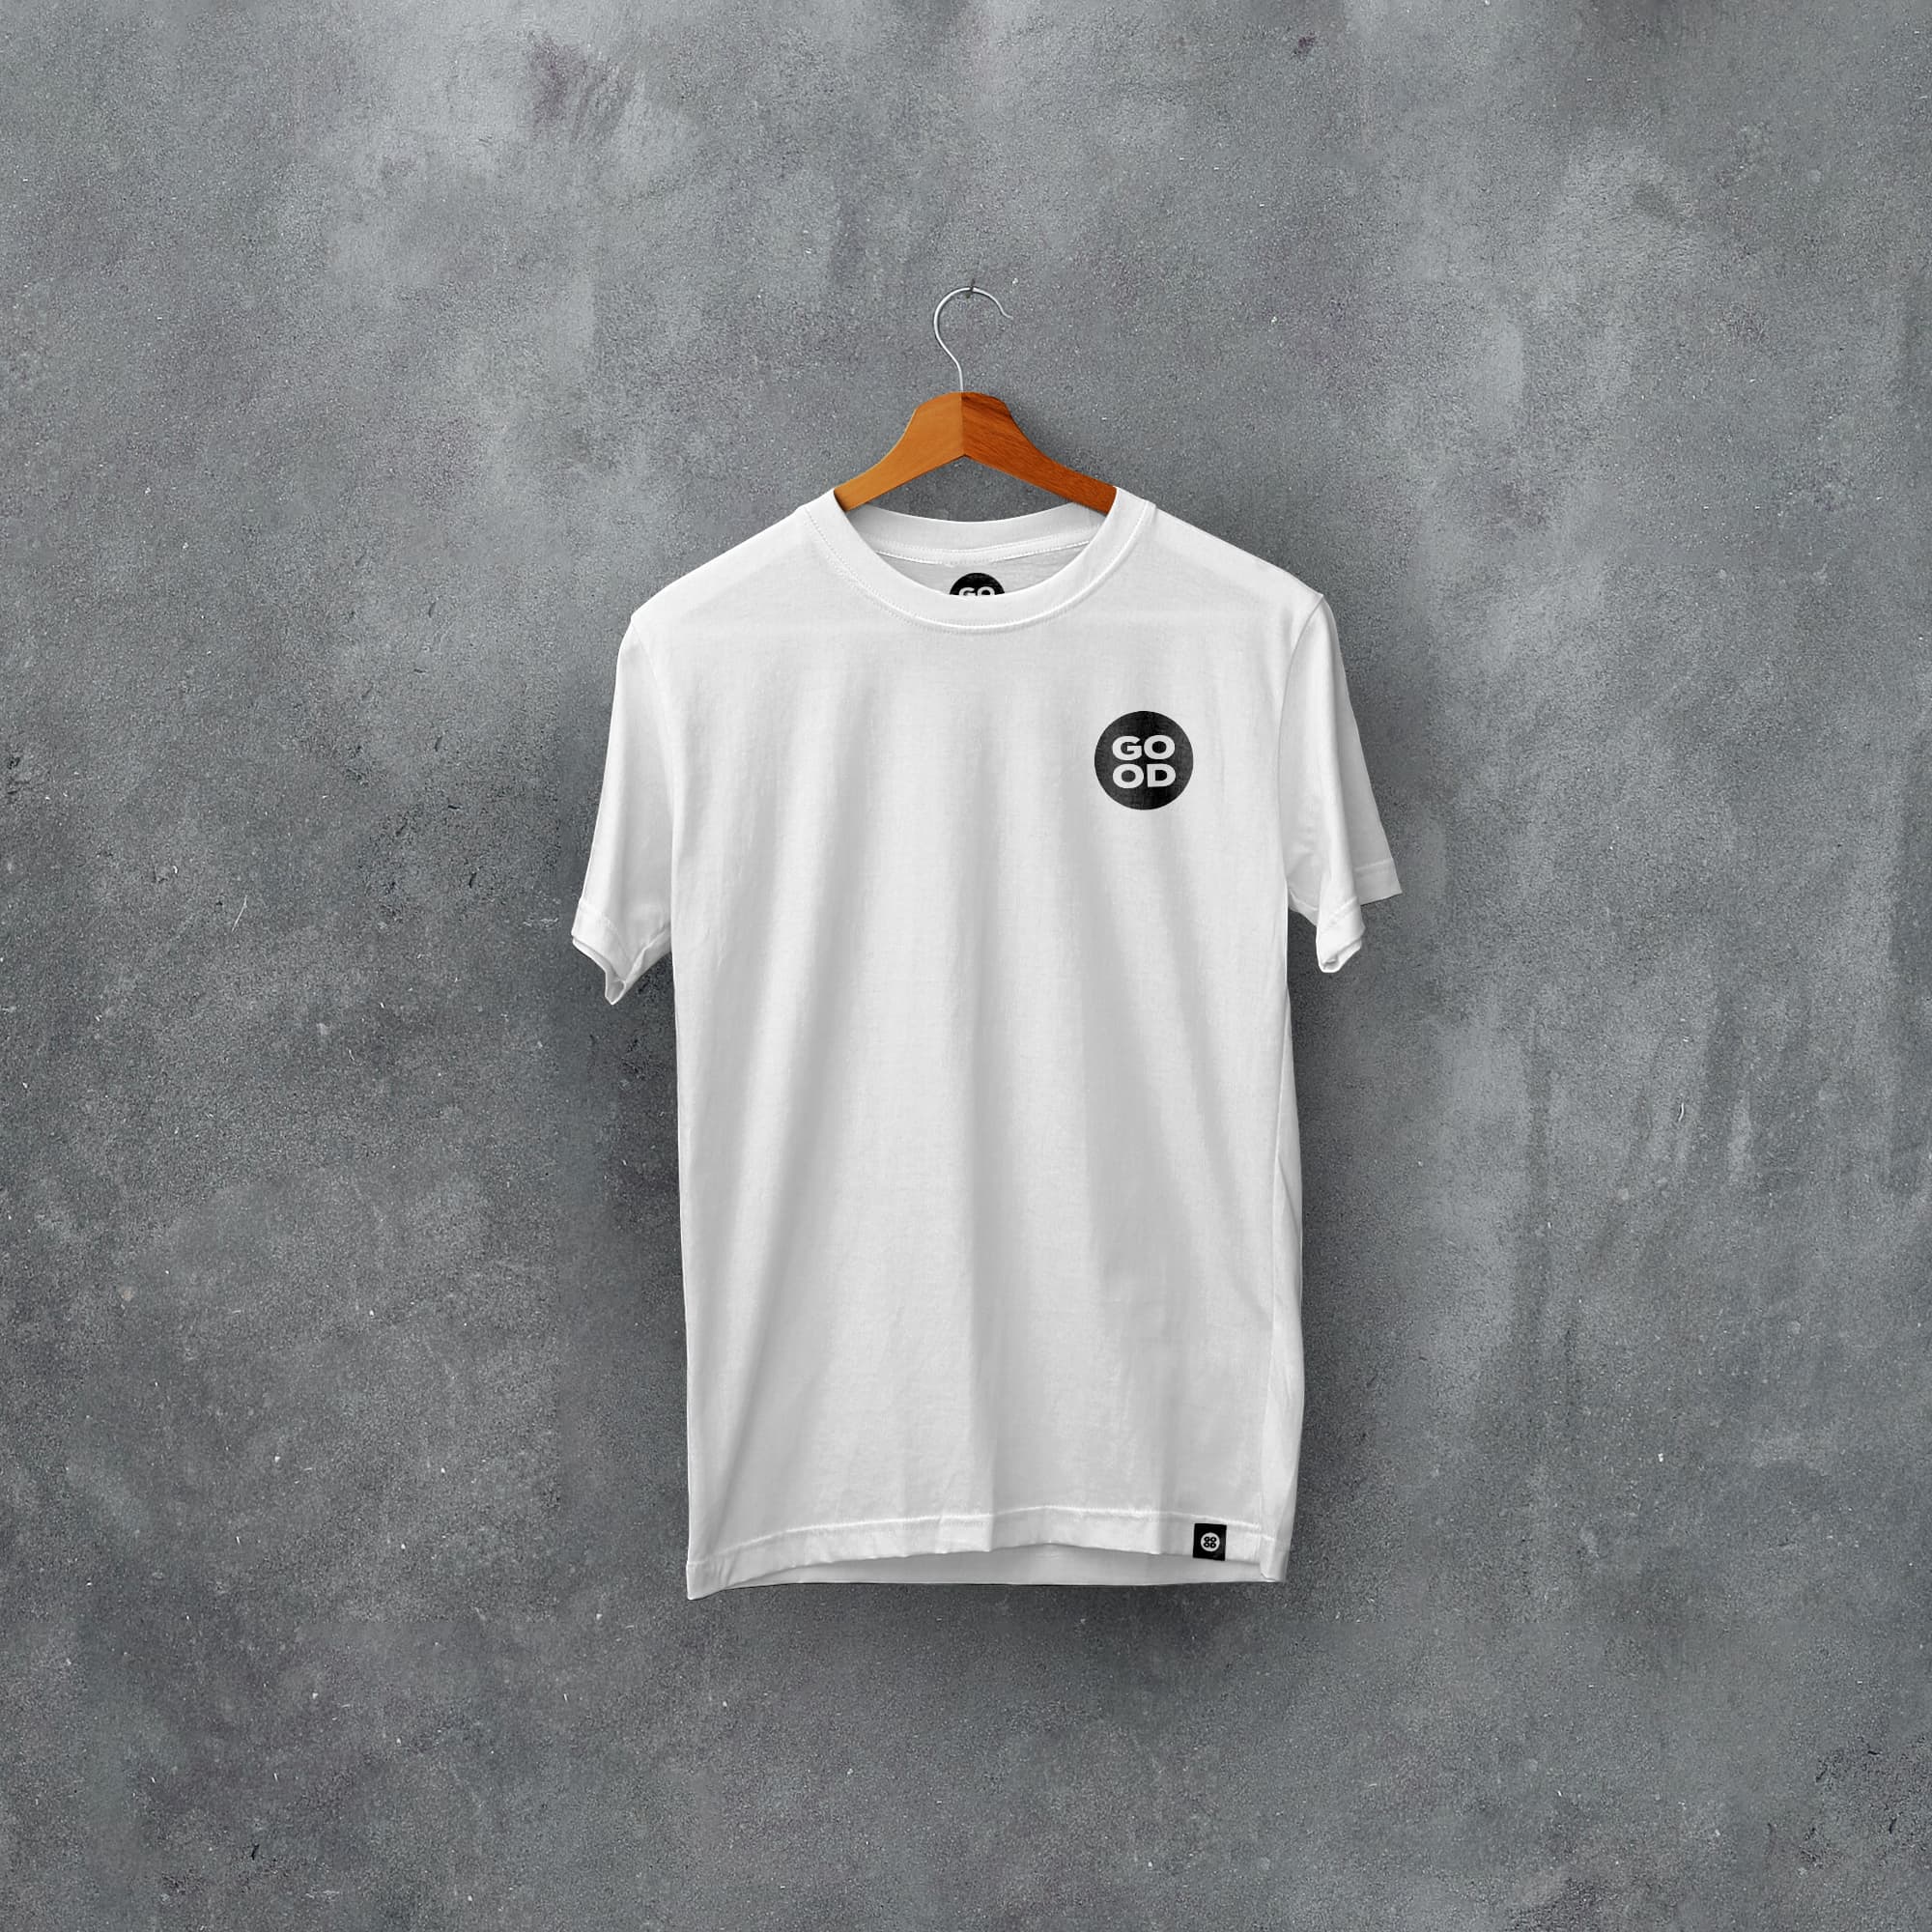 Hereford Classic Kits Football T-Shirt